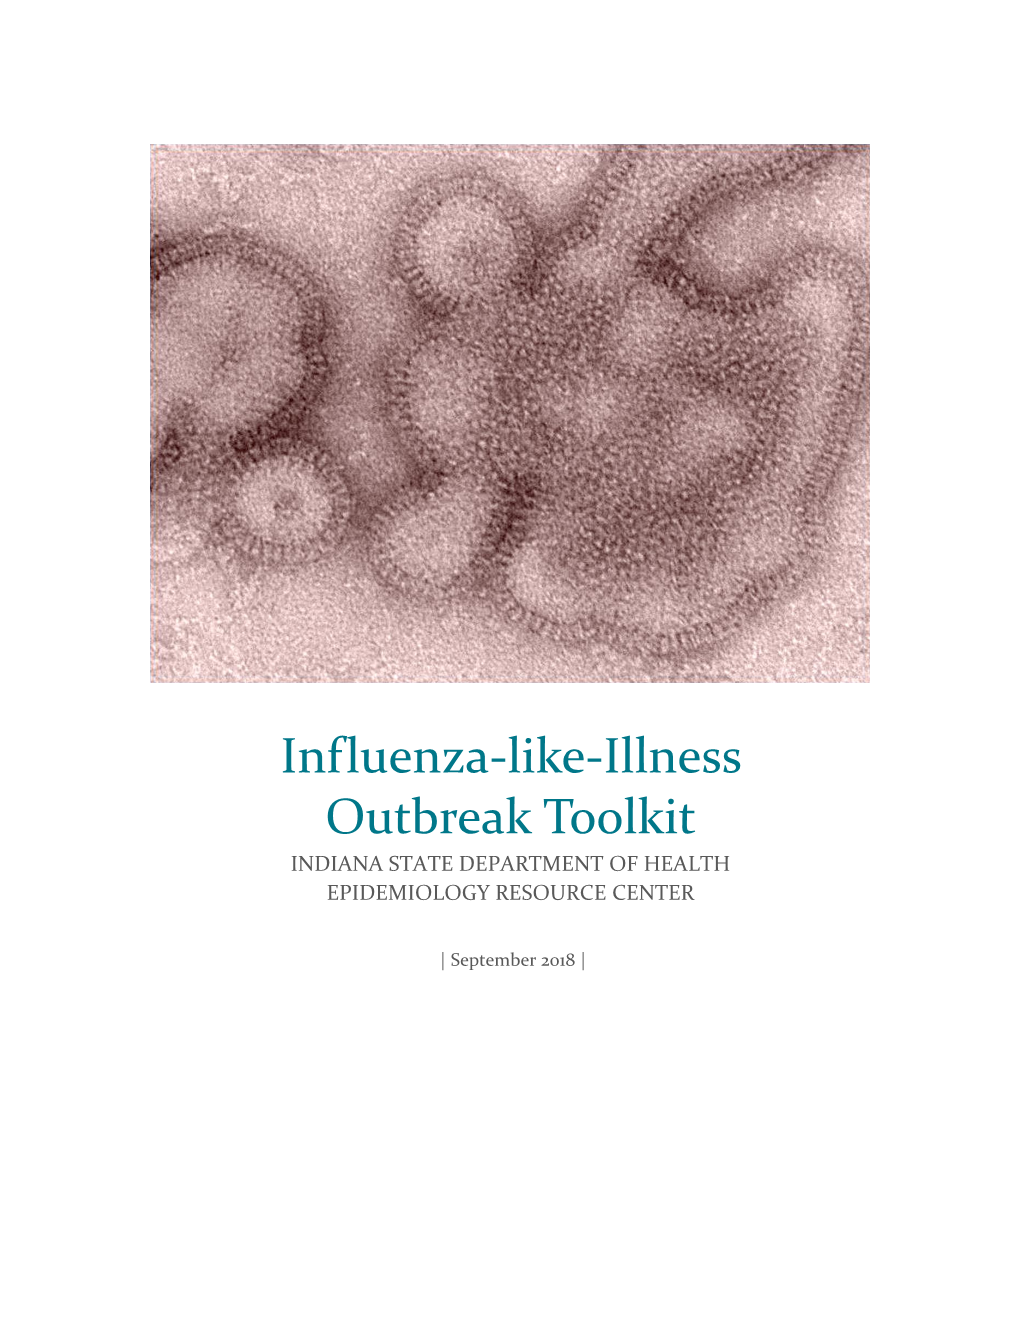 Long-Term Care Facility Influenza-Like Illness Outbreak Toolkit